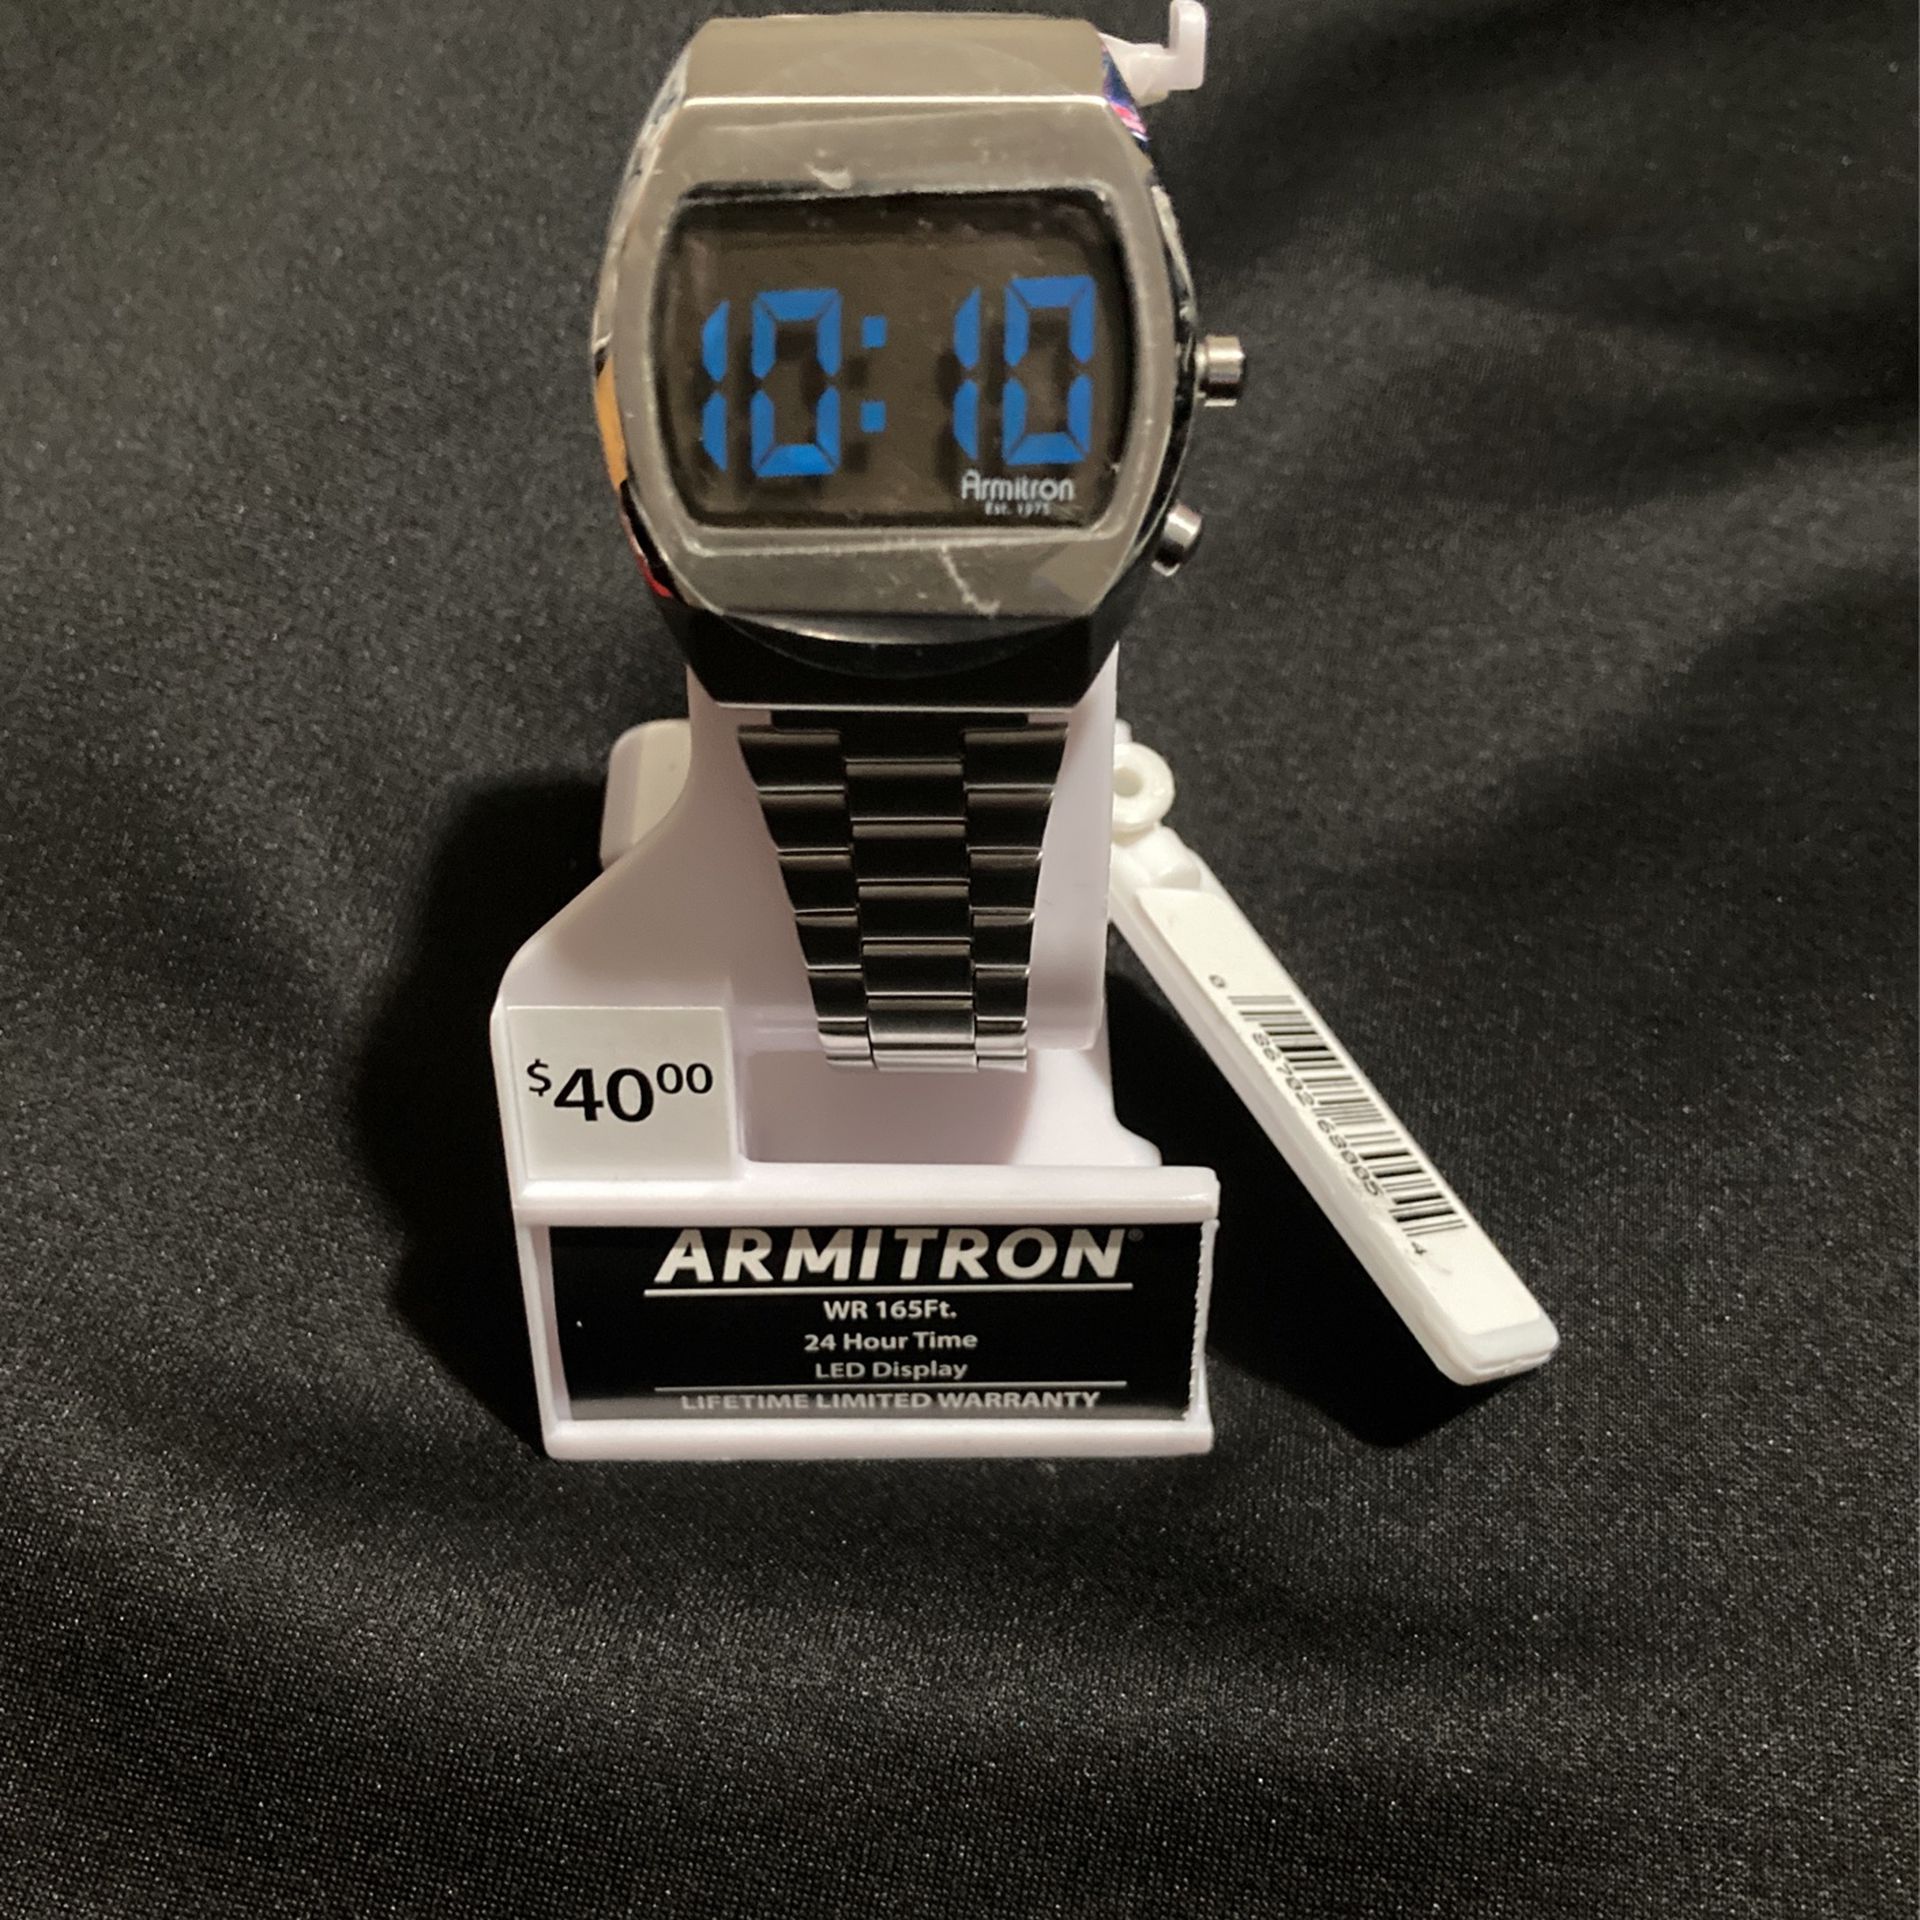 Armitron 24 Hour Time LED Display Silver Wristwatch 